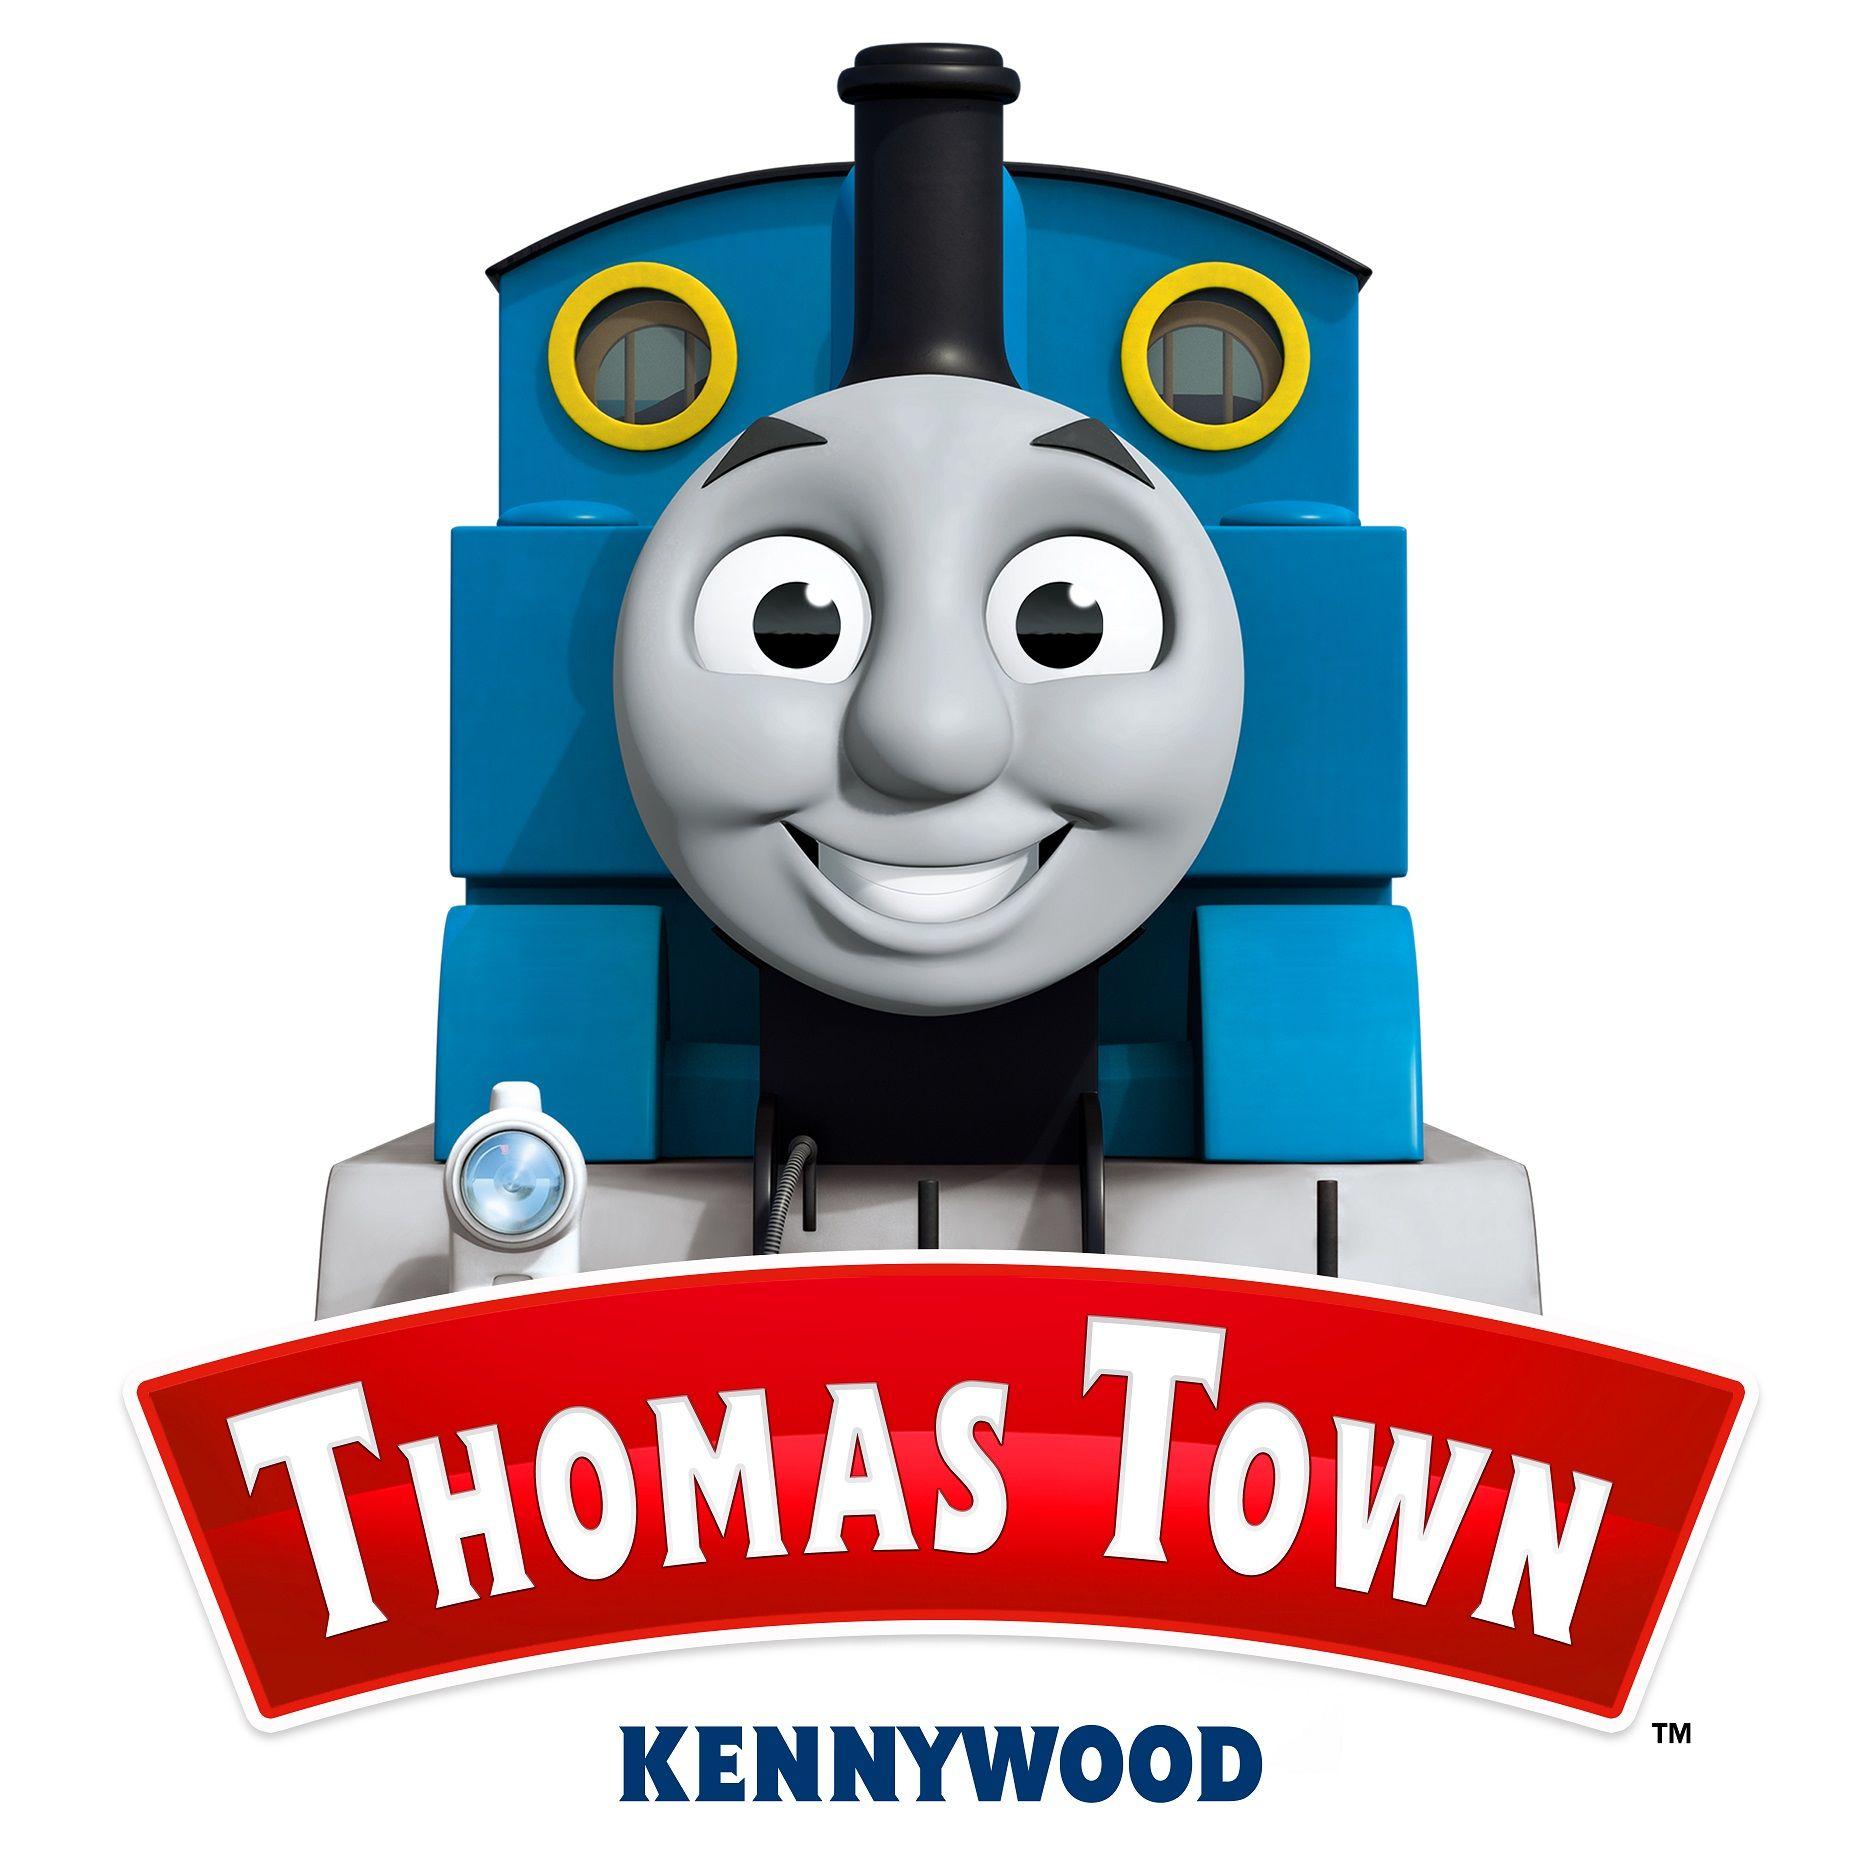 Kennywood Logo - Media Center | Kennywood